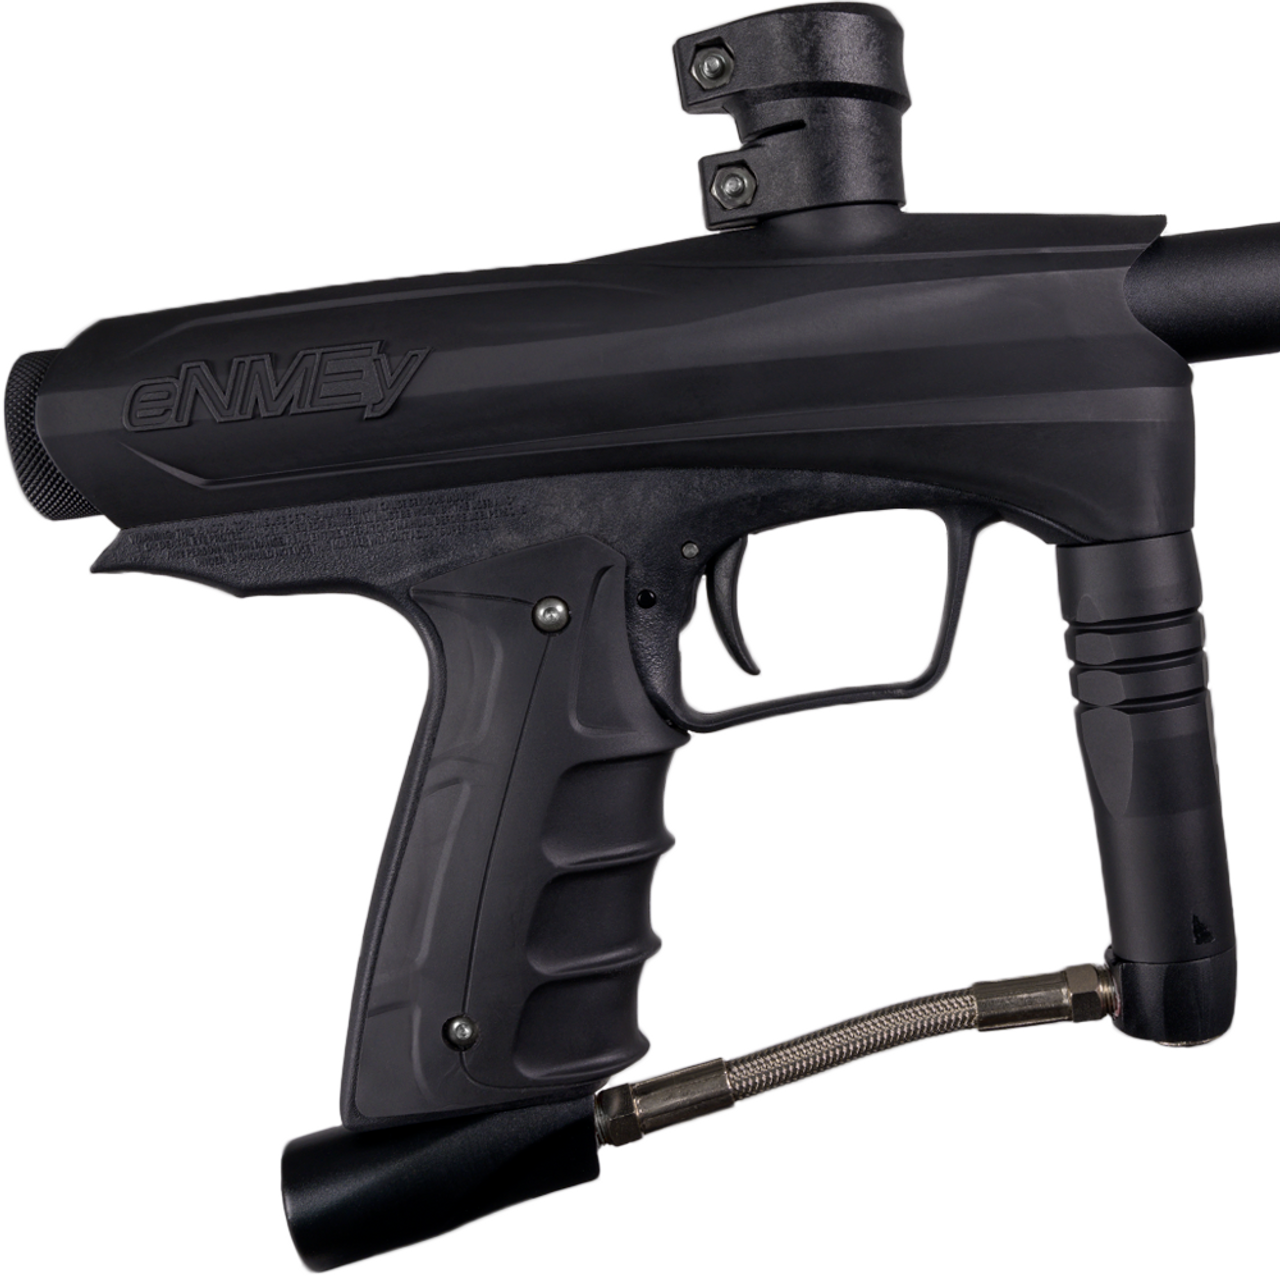 Paintball Gun Color Black